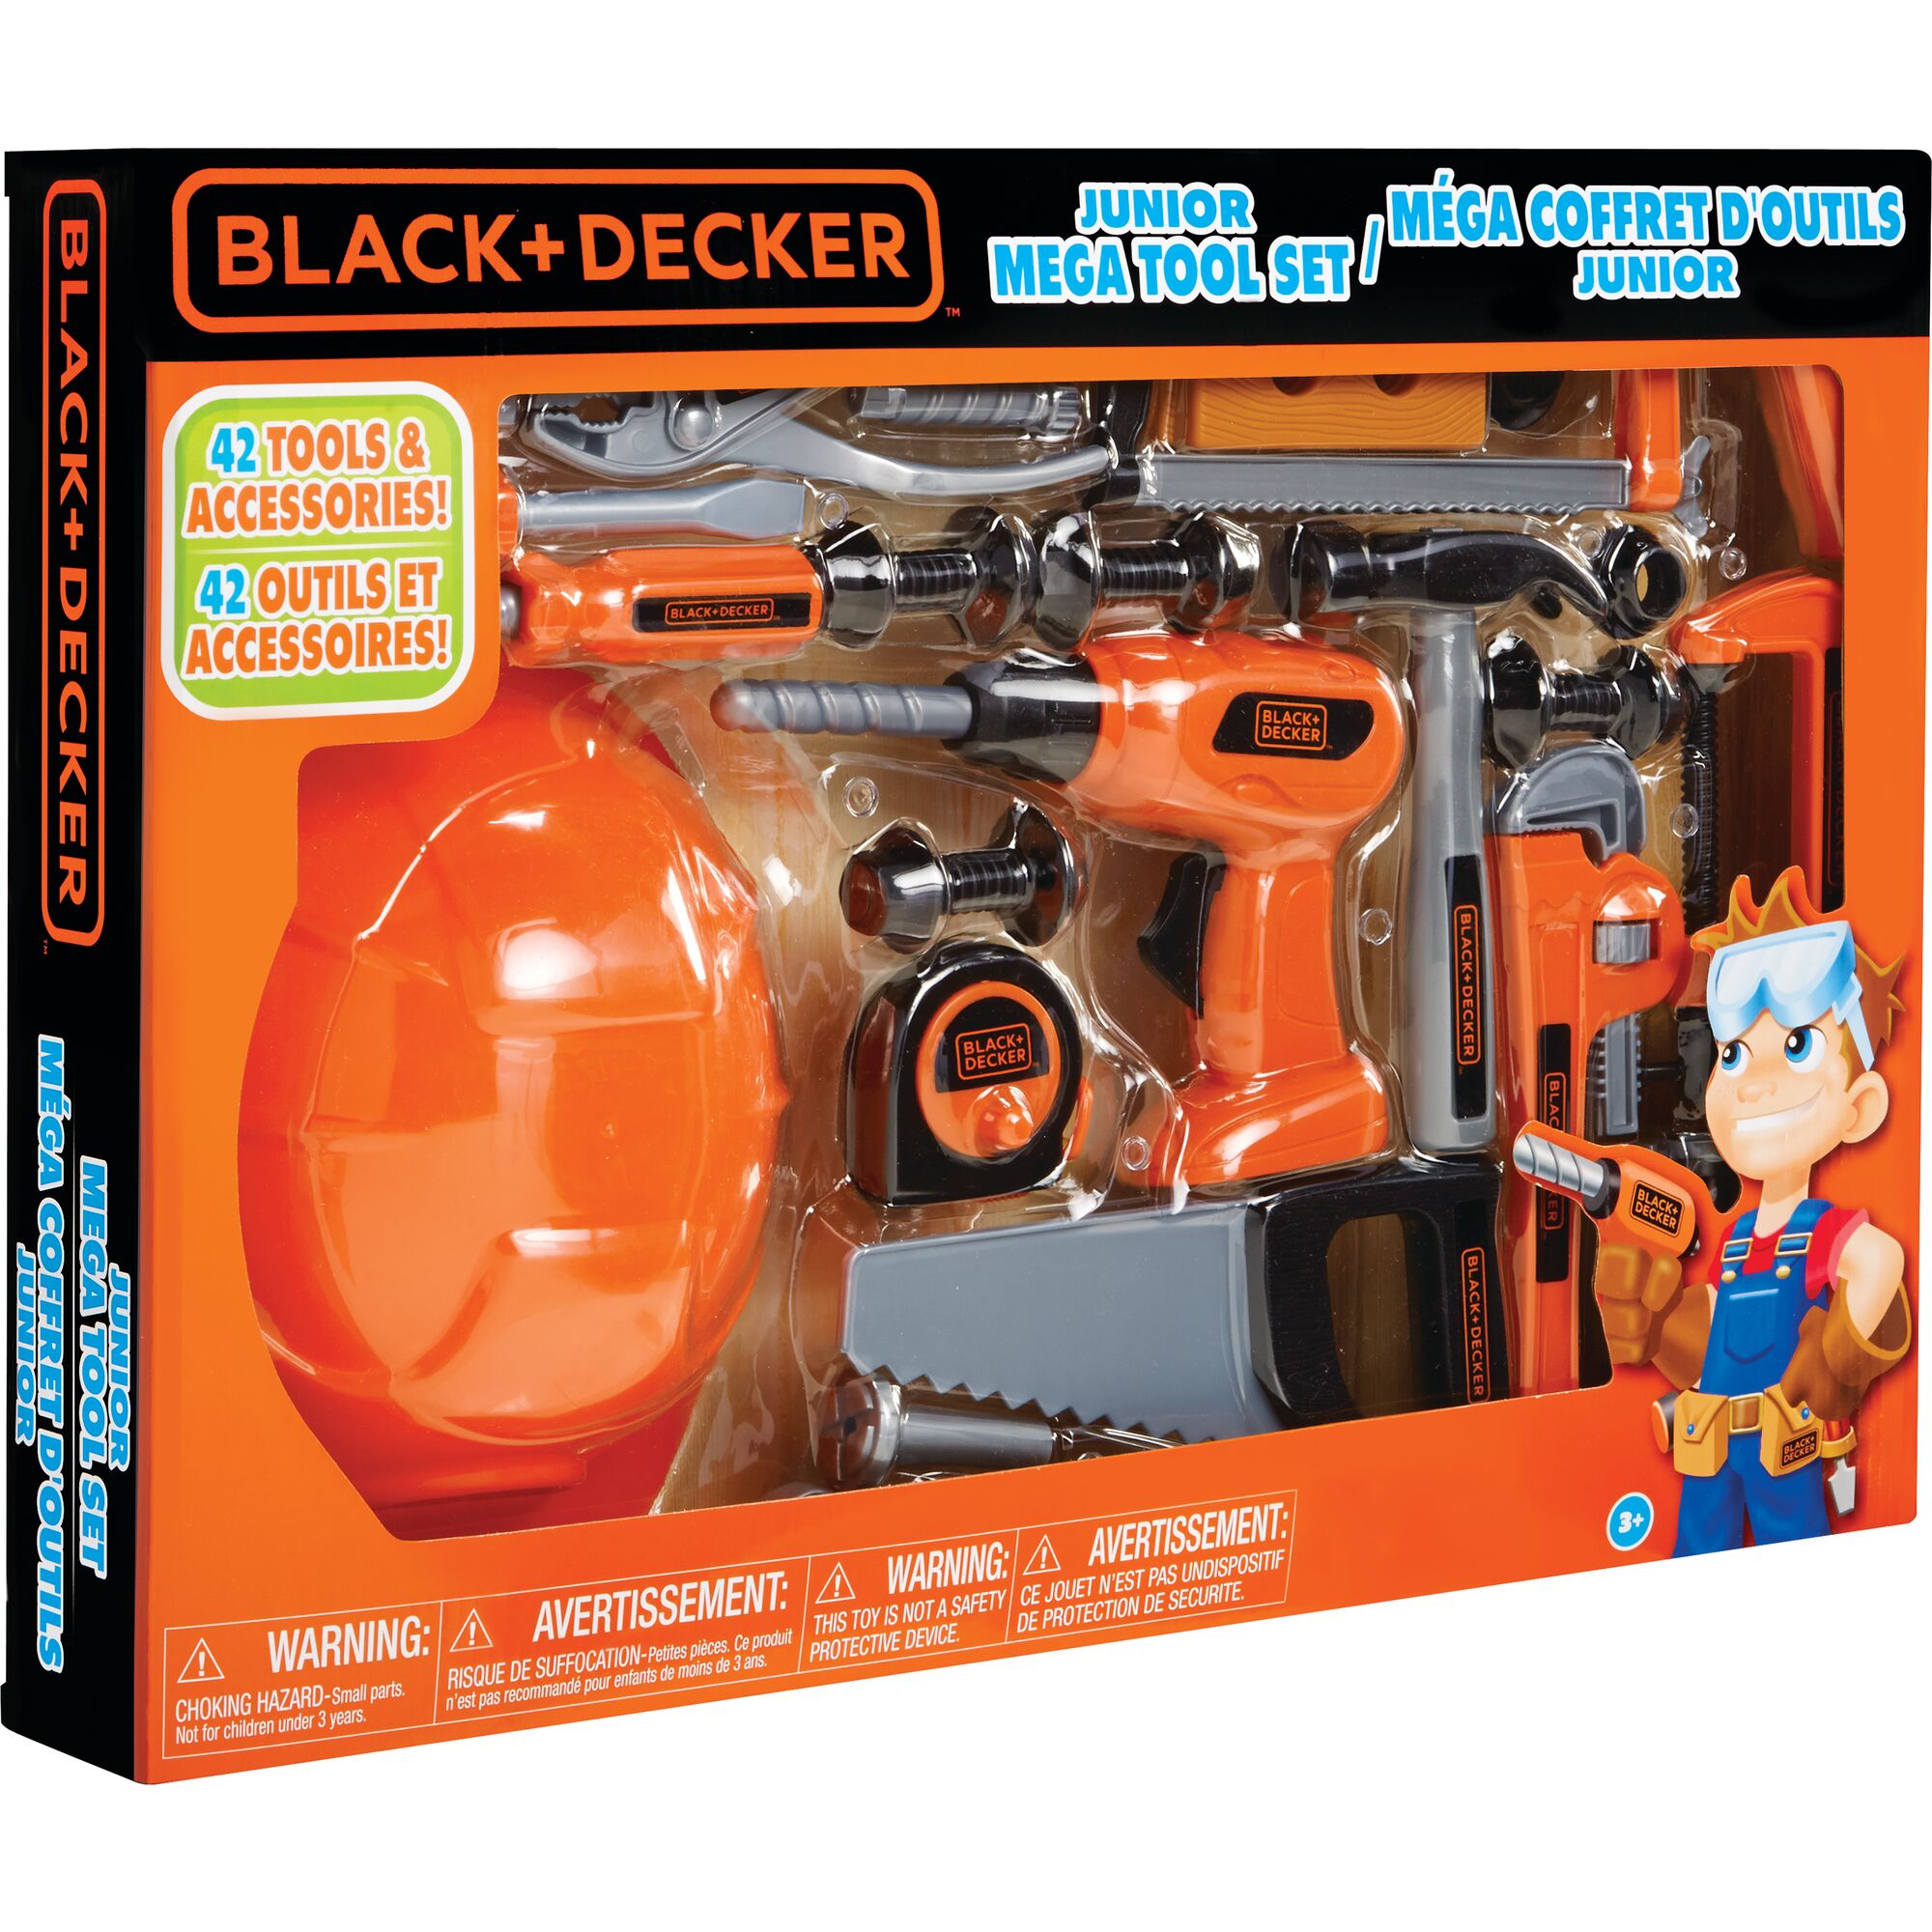  Black + Decker 71382 Jr. Mega Power N' Play Workbench